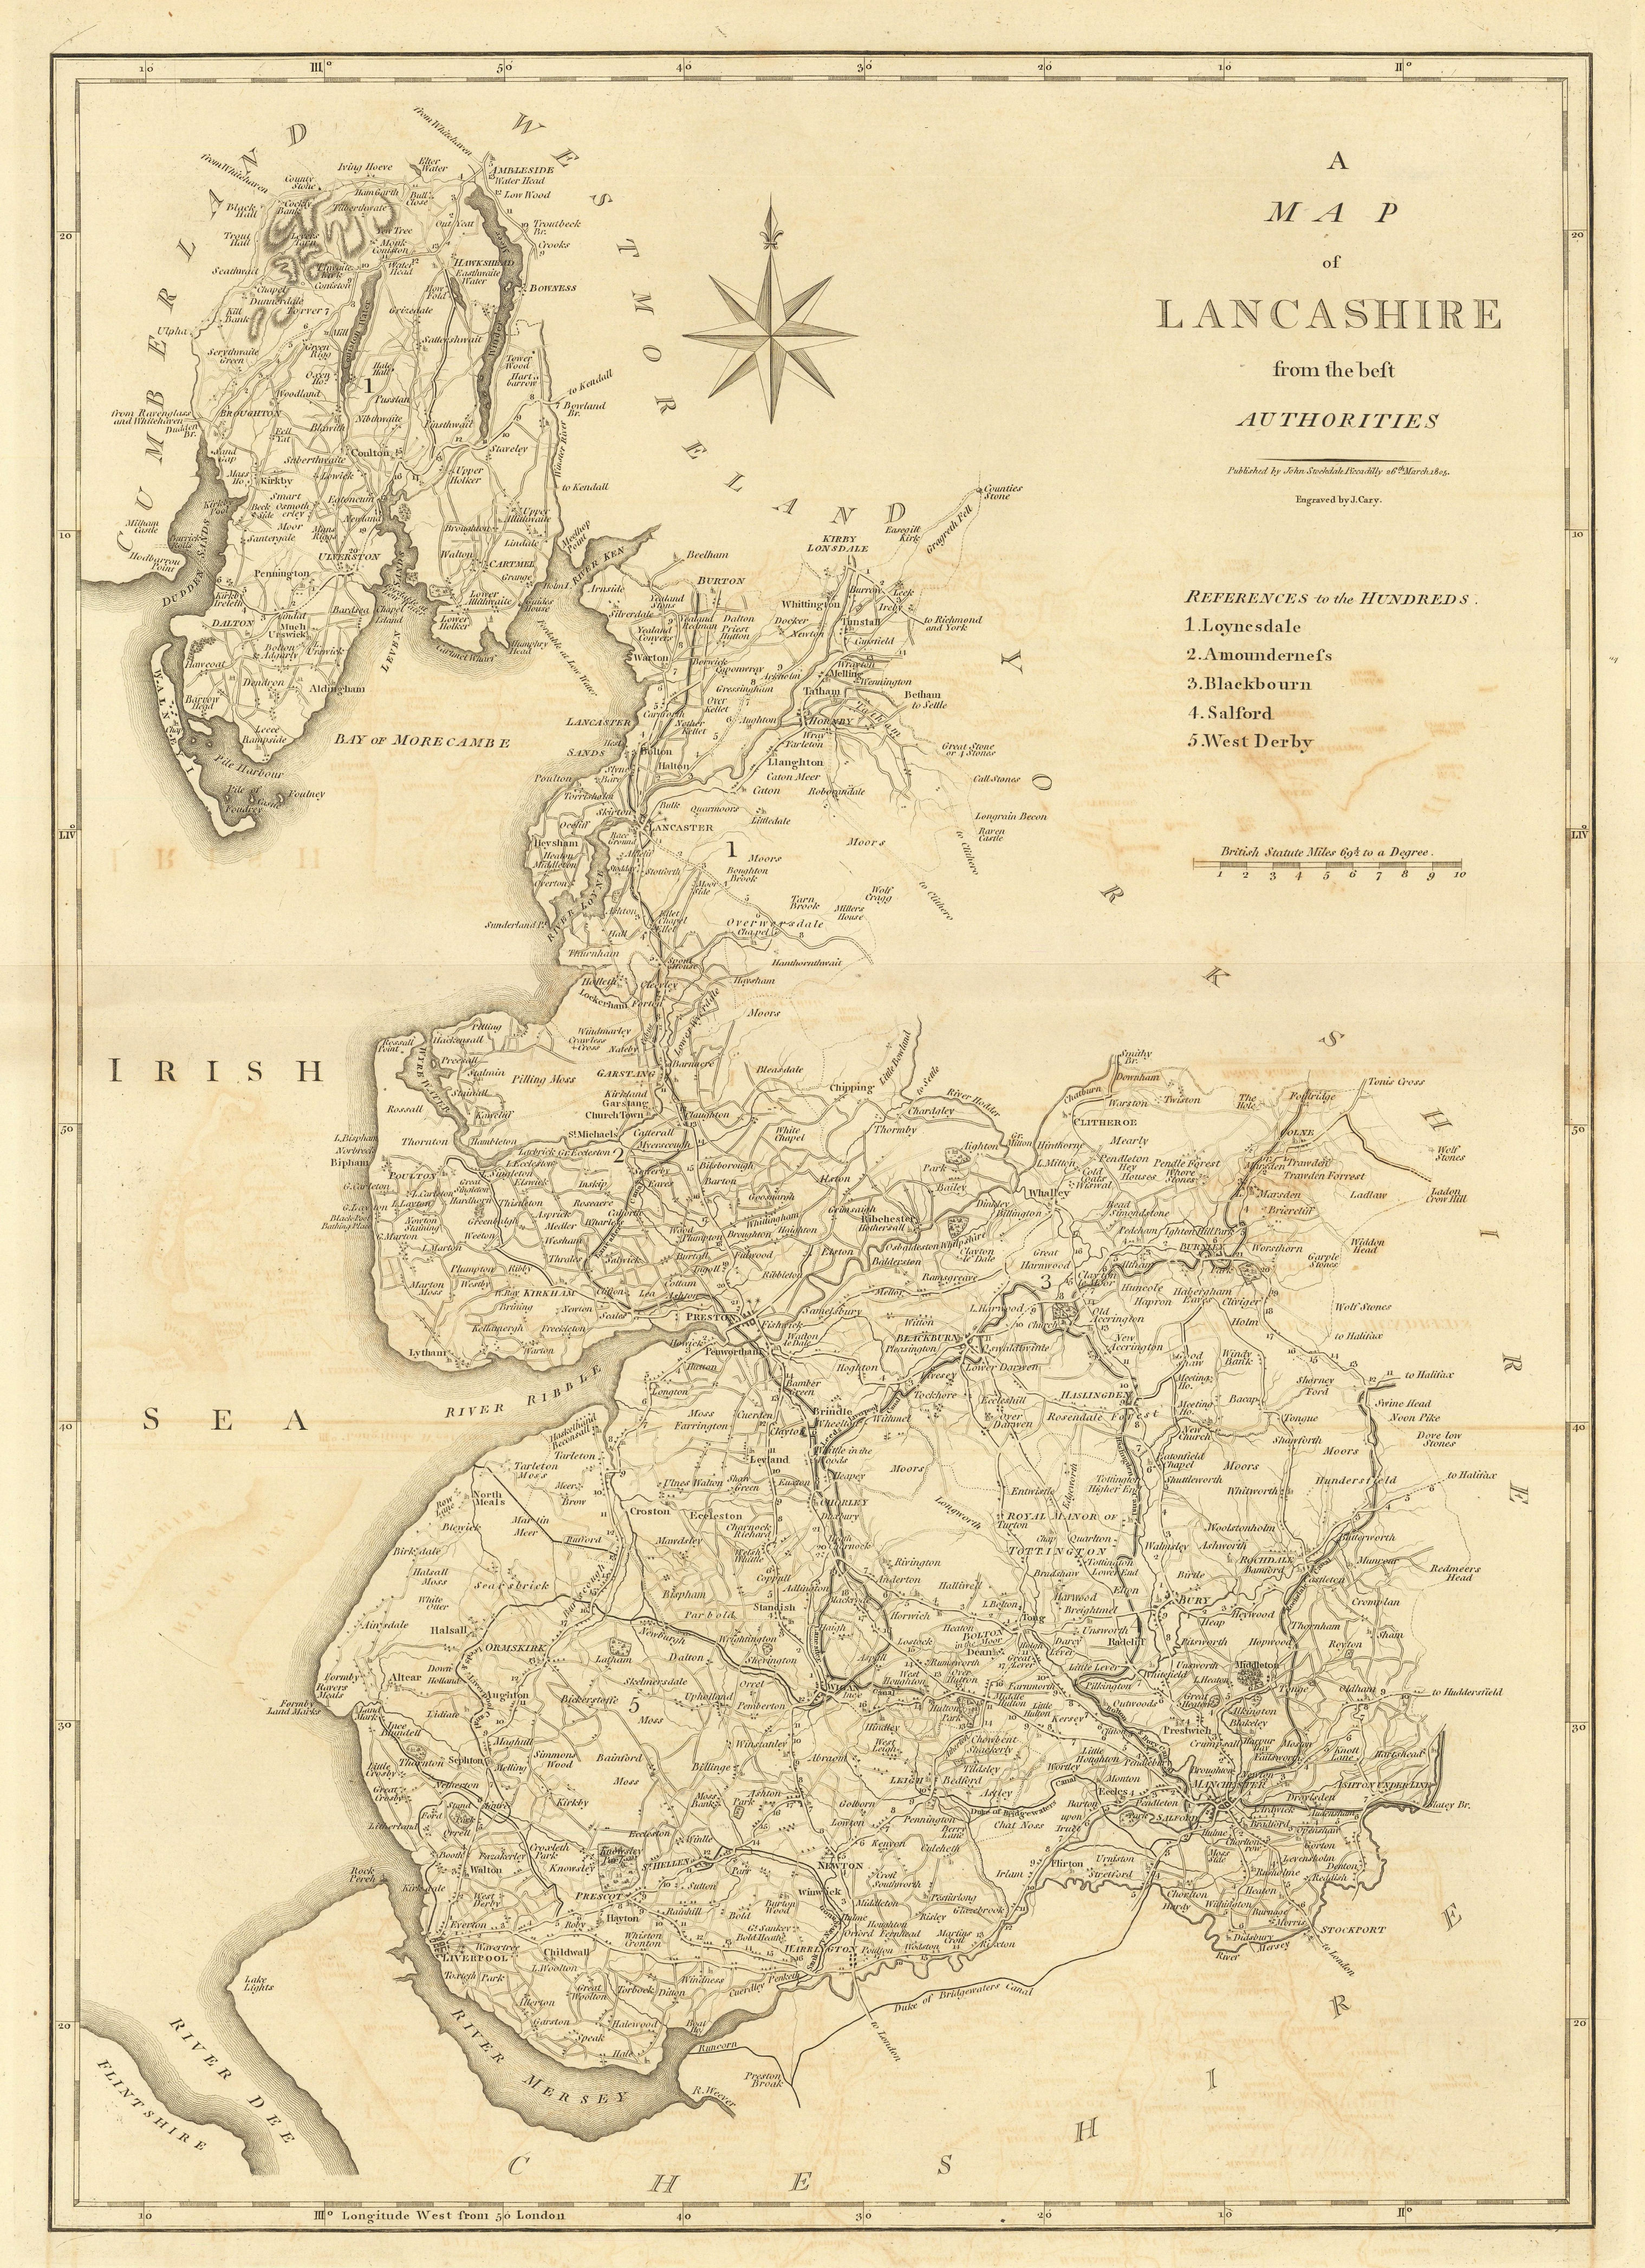 Dilworth Old map of Longridge NE Lancashire in 1913: 54NW repro 